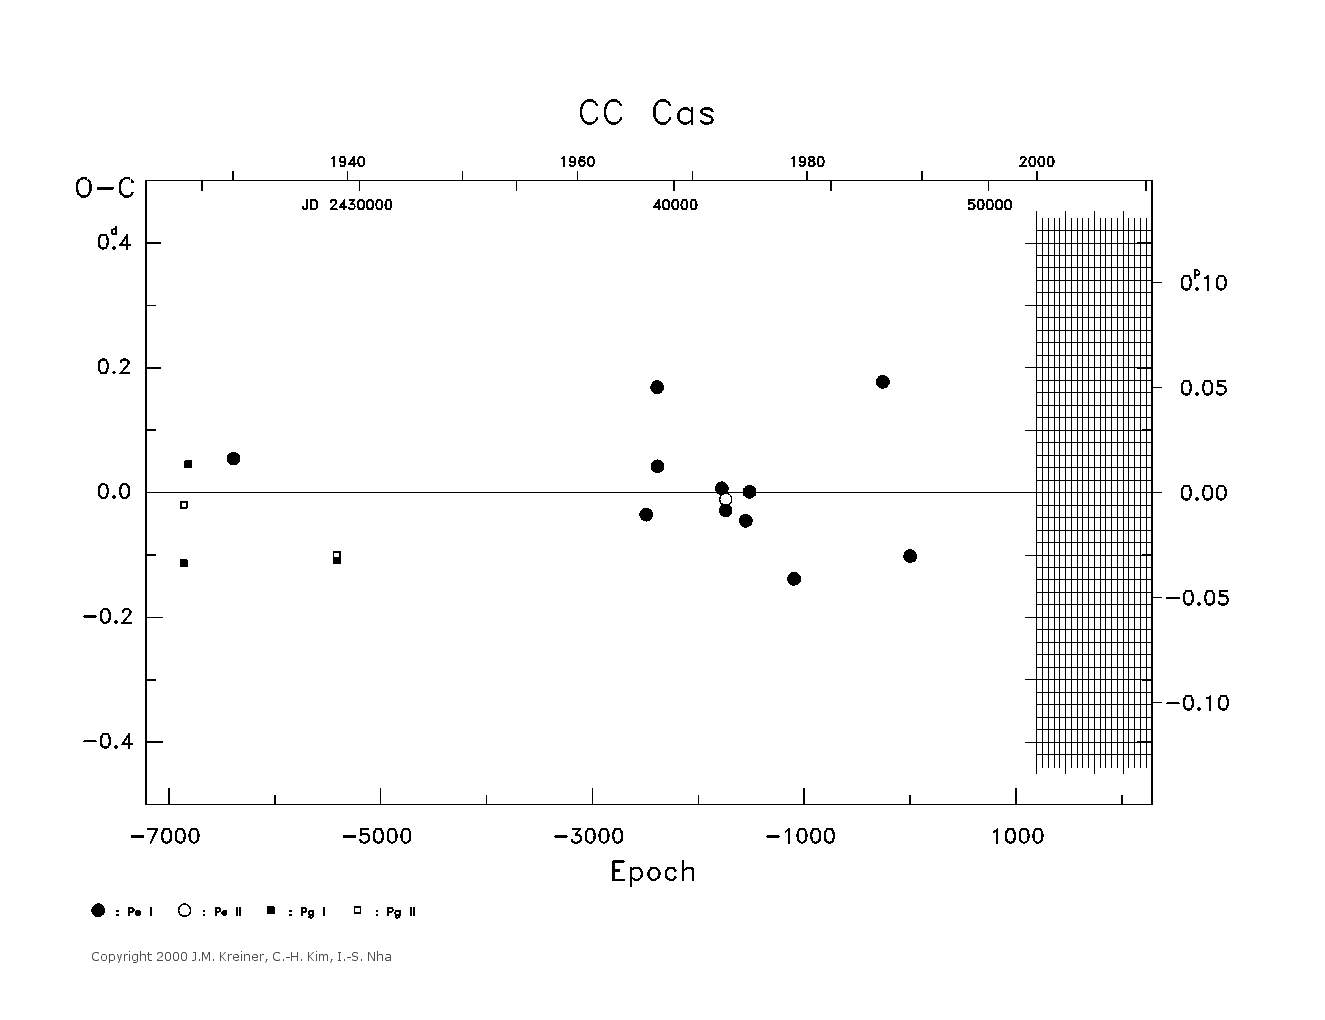 [IMAGE: large CC CAS O-C diagram]